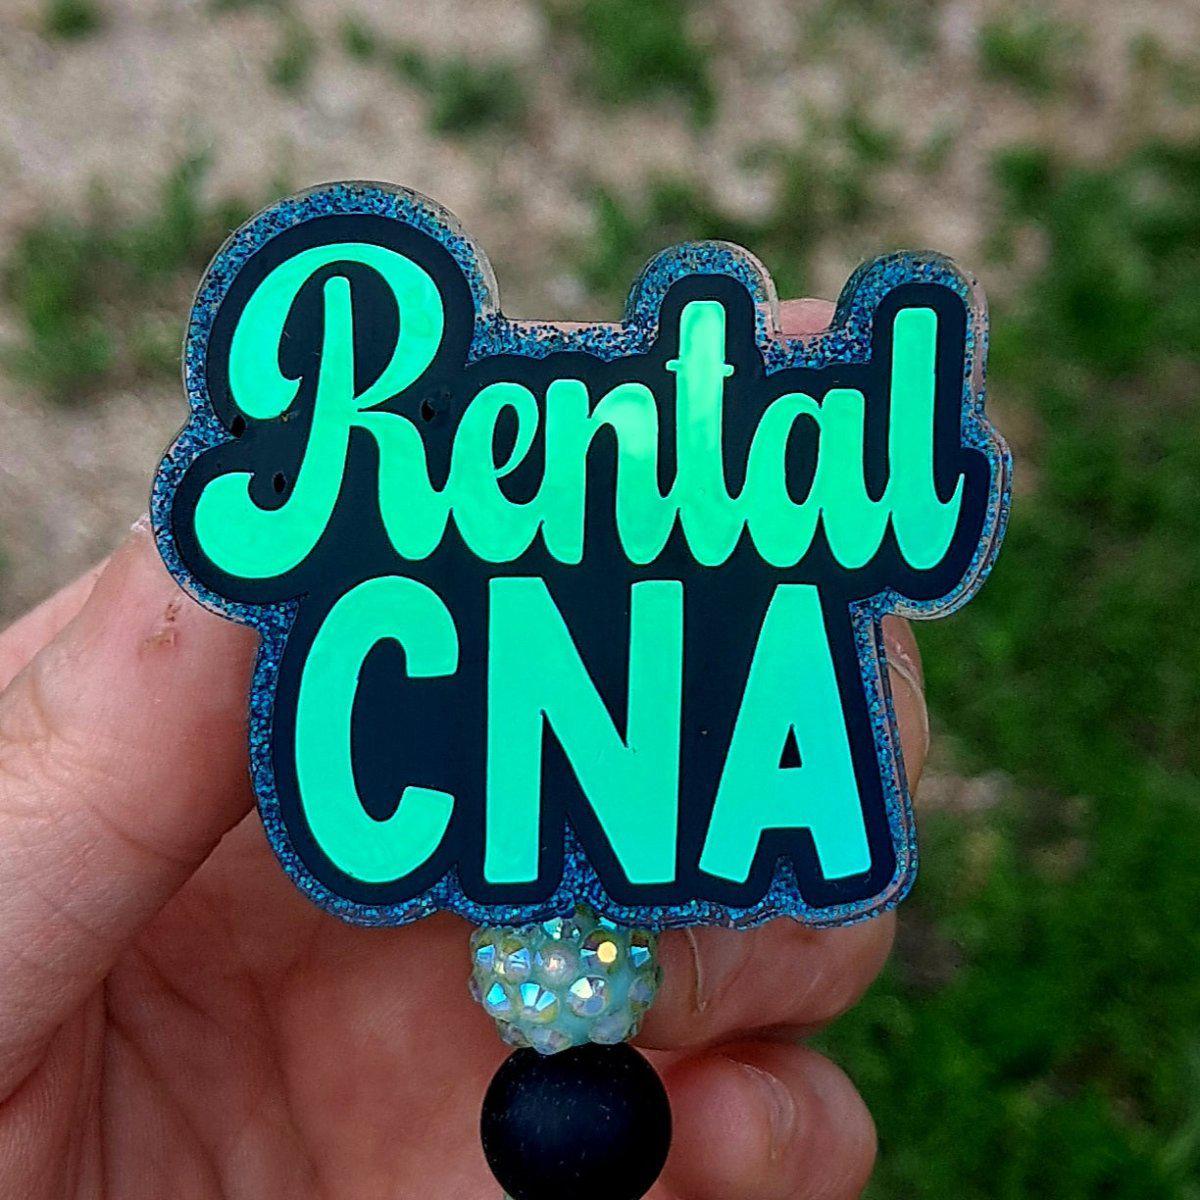 Rental CNA Work Id Badge Reel Holder Clip - The Badge Boutique Co